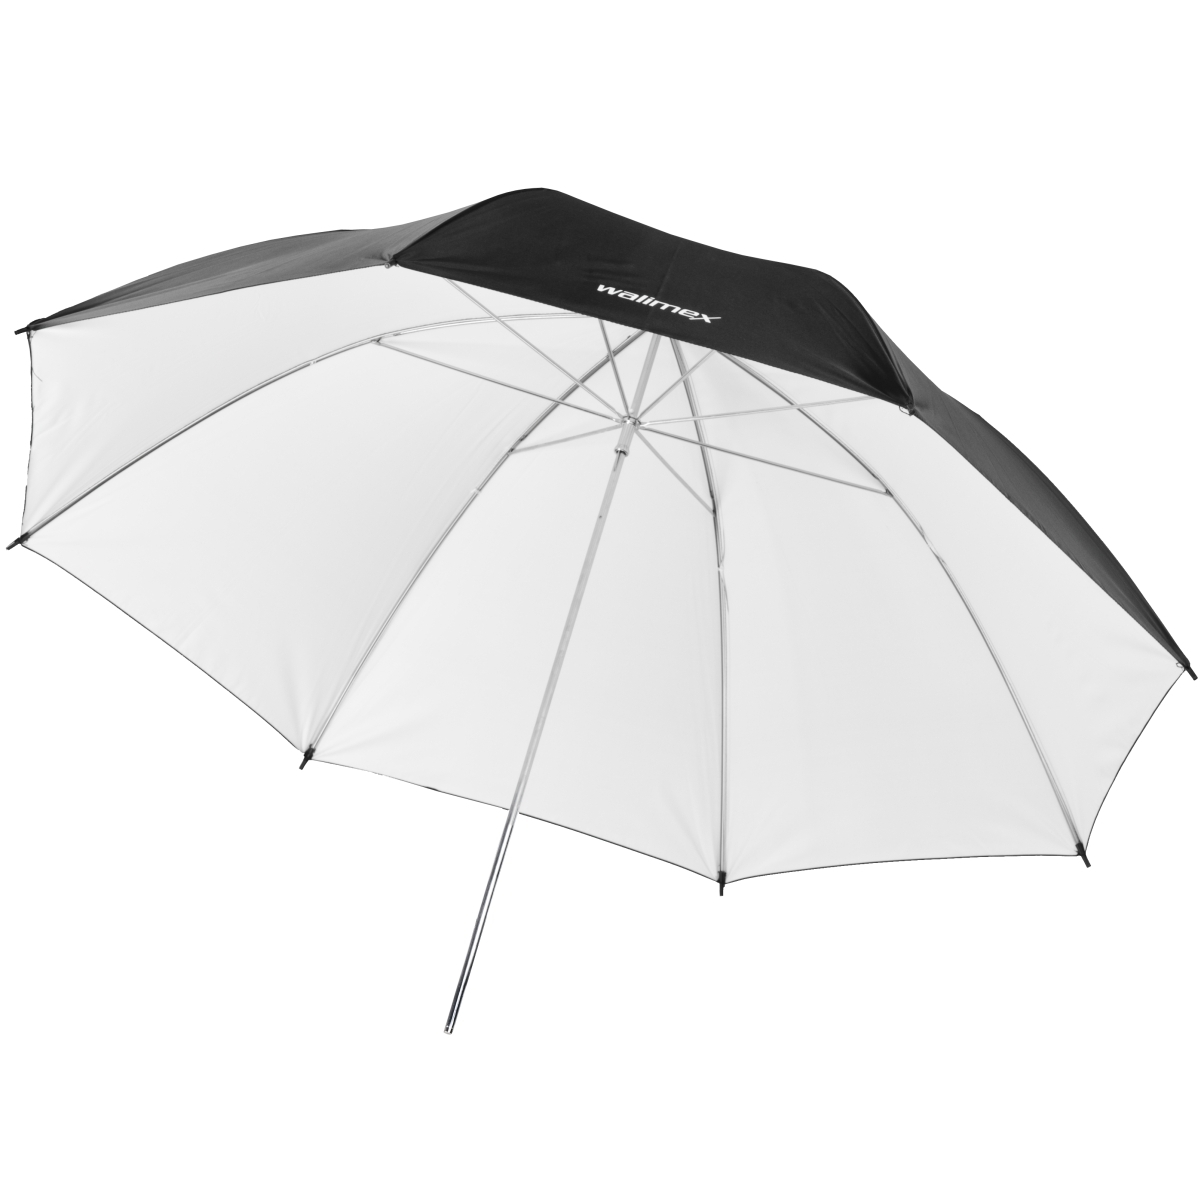 Walimex pro Reflex Umbrella black/white, 84cm